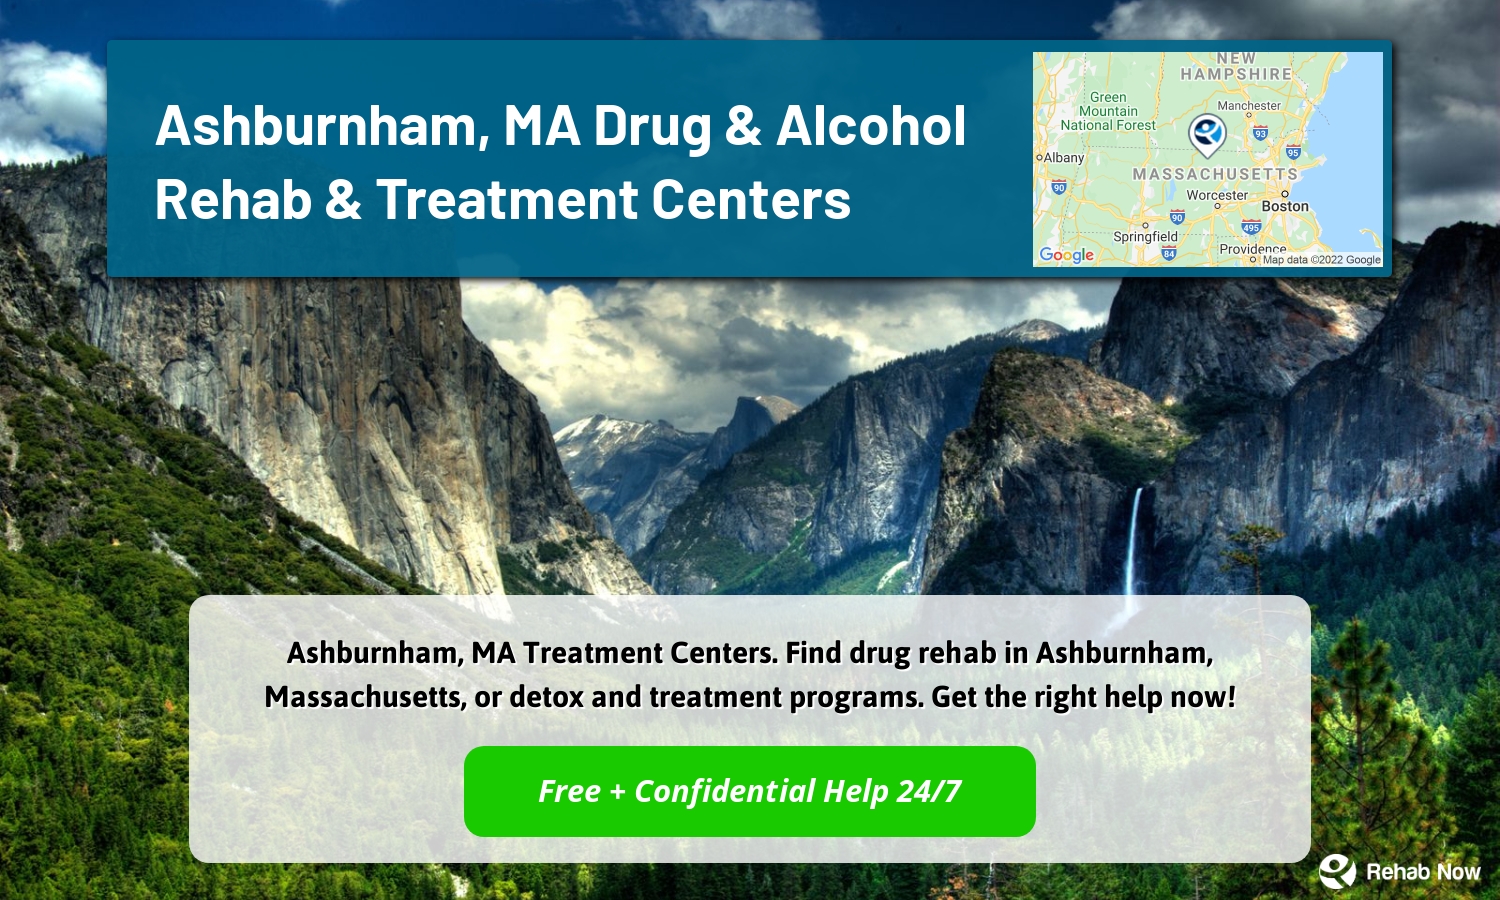 Ashburnham, MA Treatment Centers. Find drug rehab in Ashburnham, Massachusetts, or detox and treatment programs. Get the right help now!